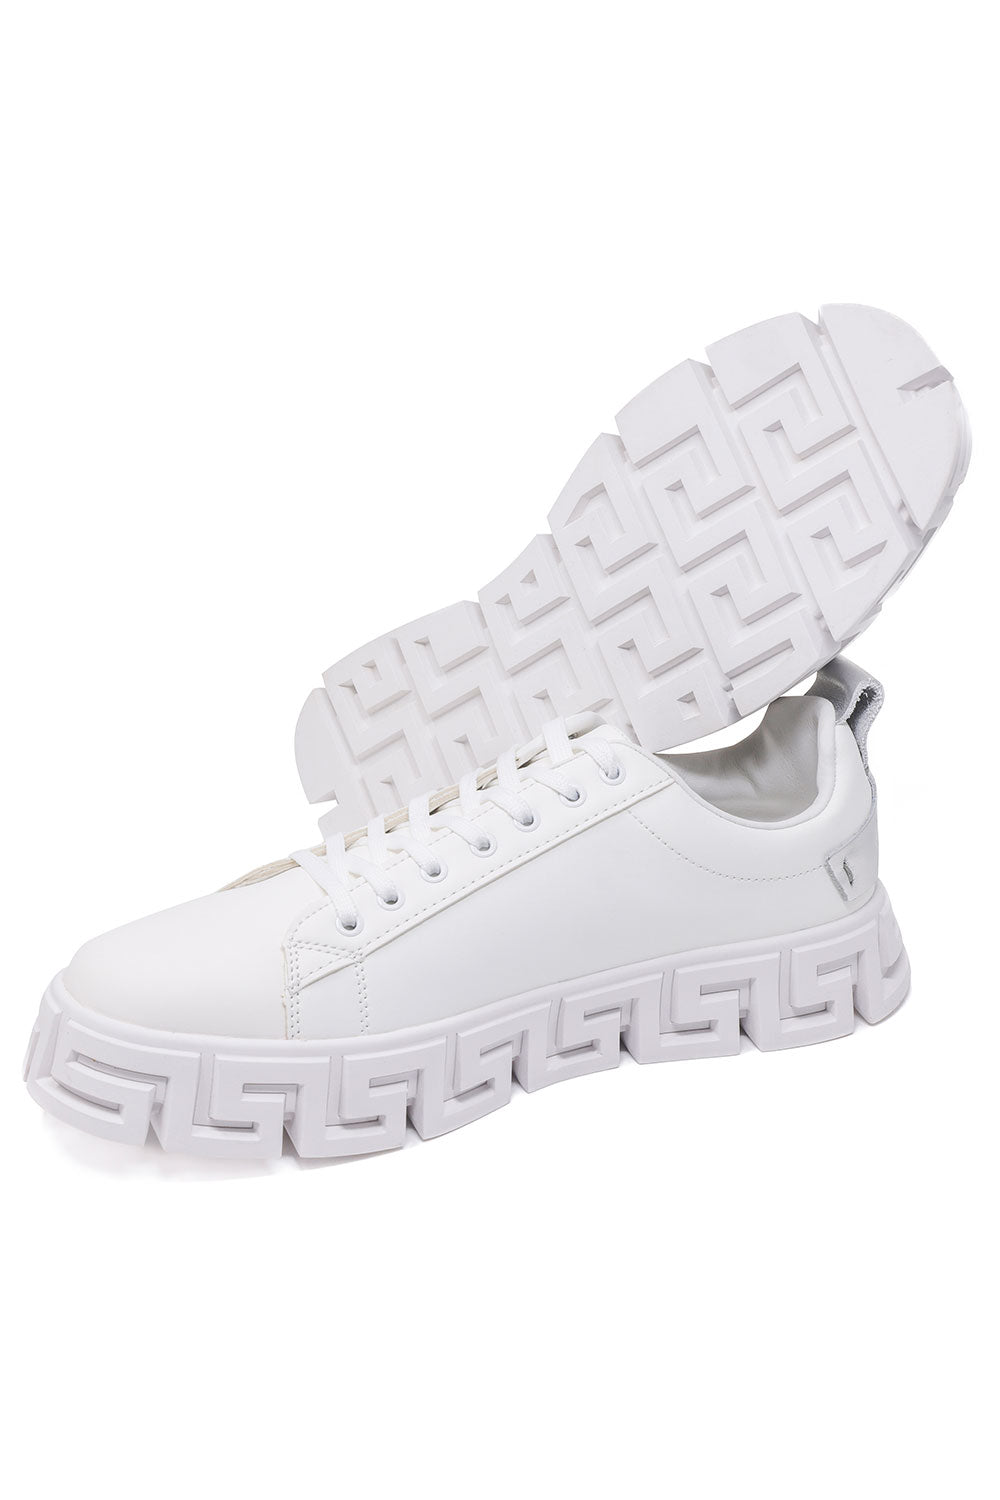 Barabas Men's Greek Key Sole Pattern Premium Sneakers 4SK06 White Silver